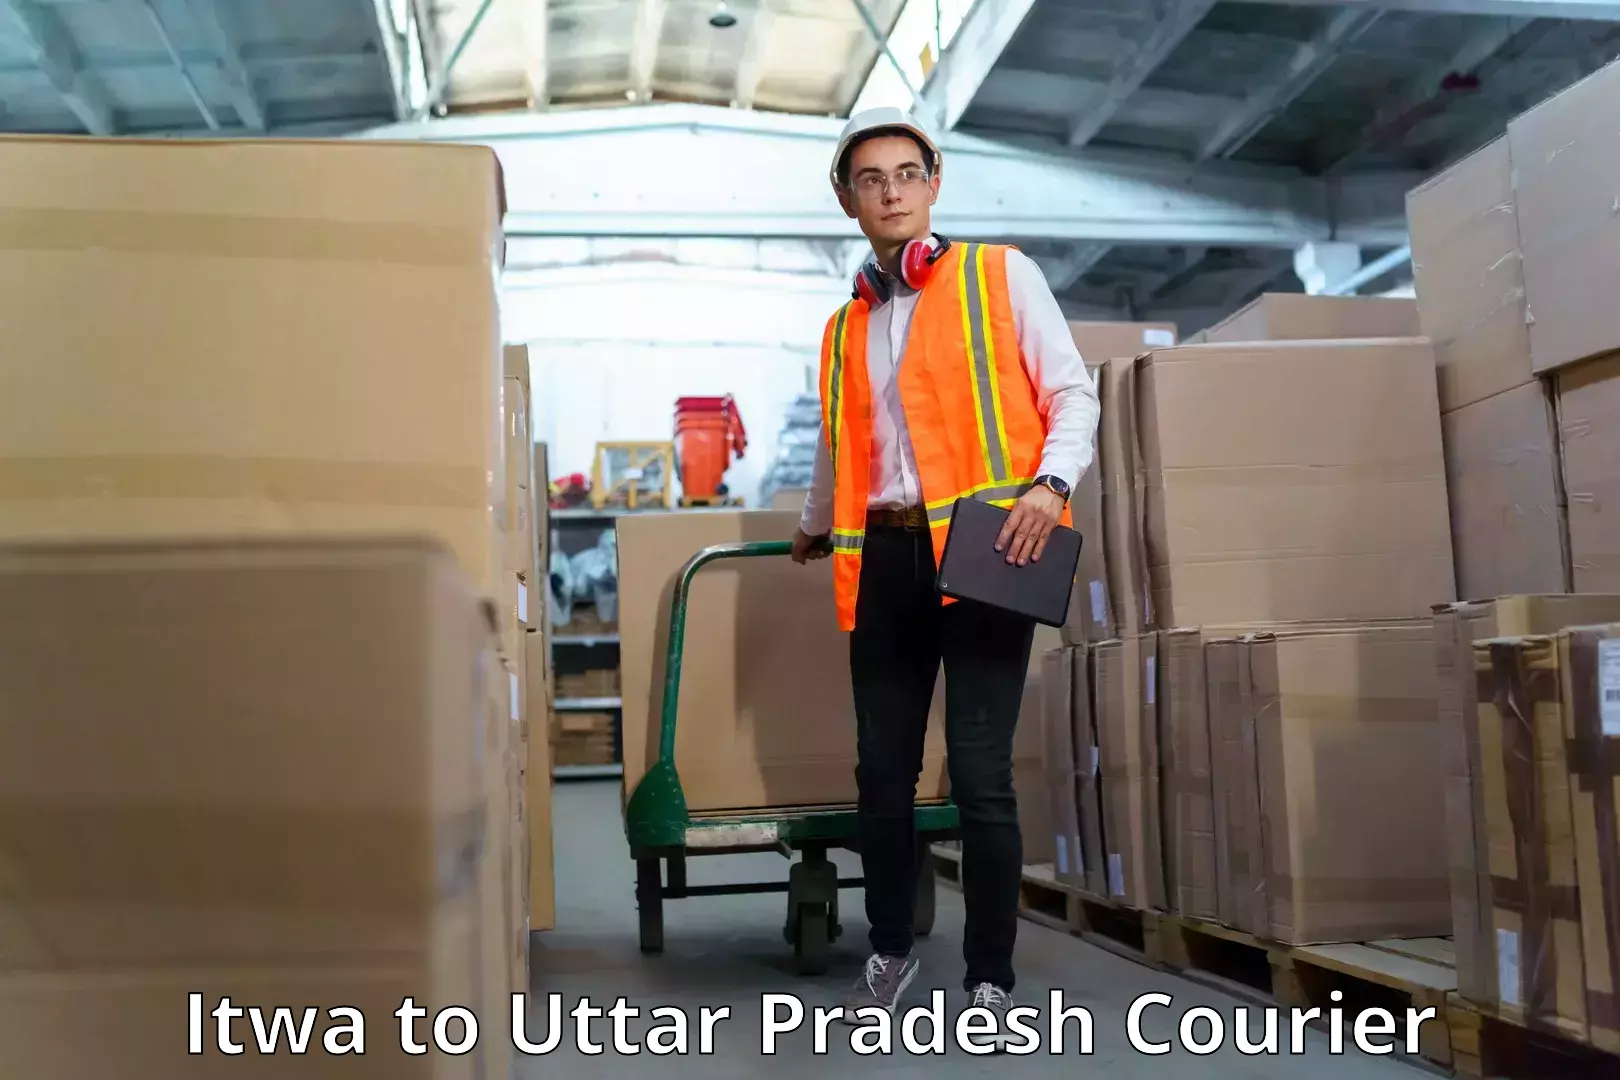 Courier service comparison in Itwa to Uttar Pradesh